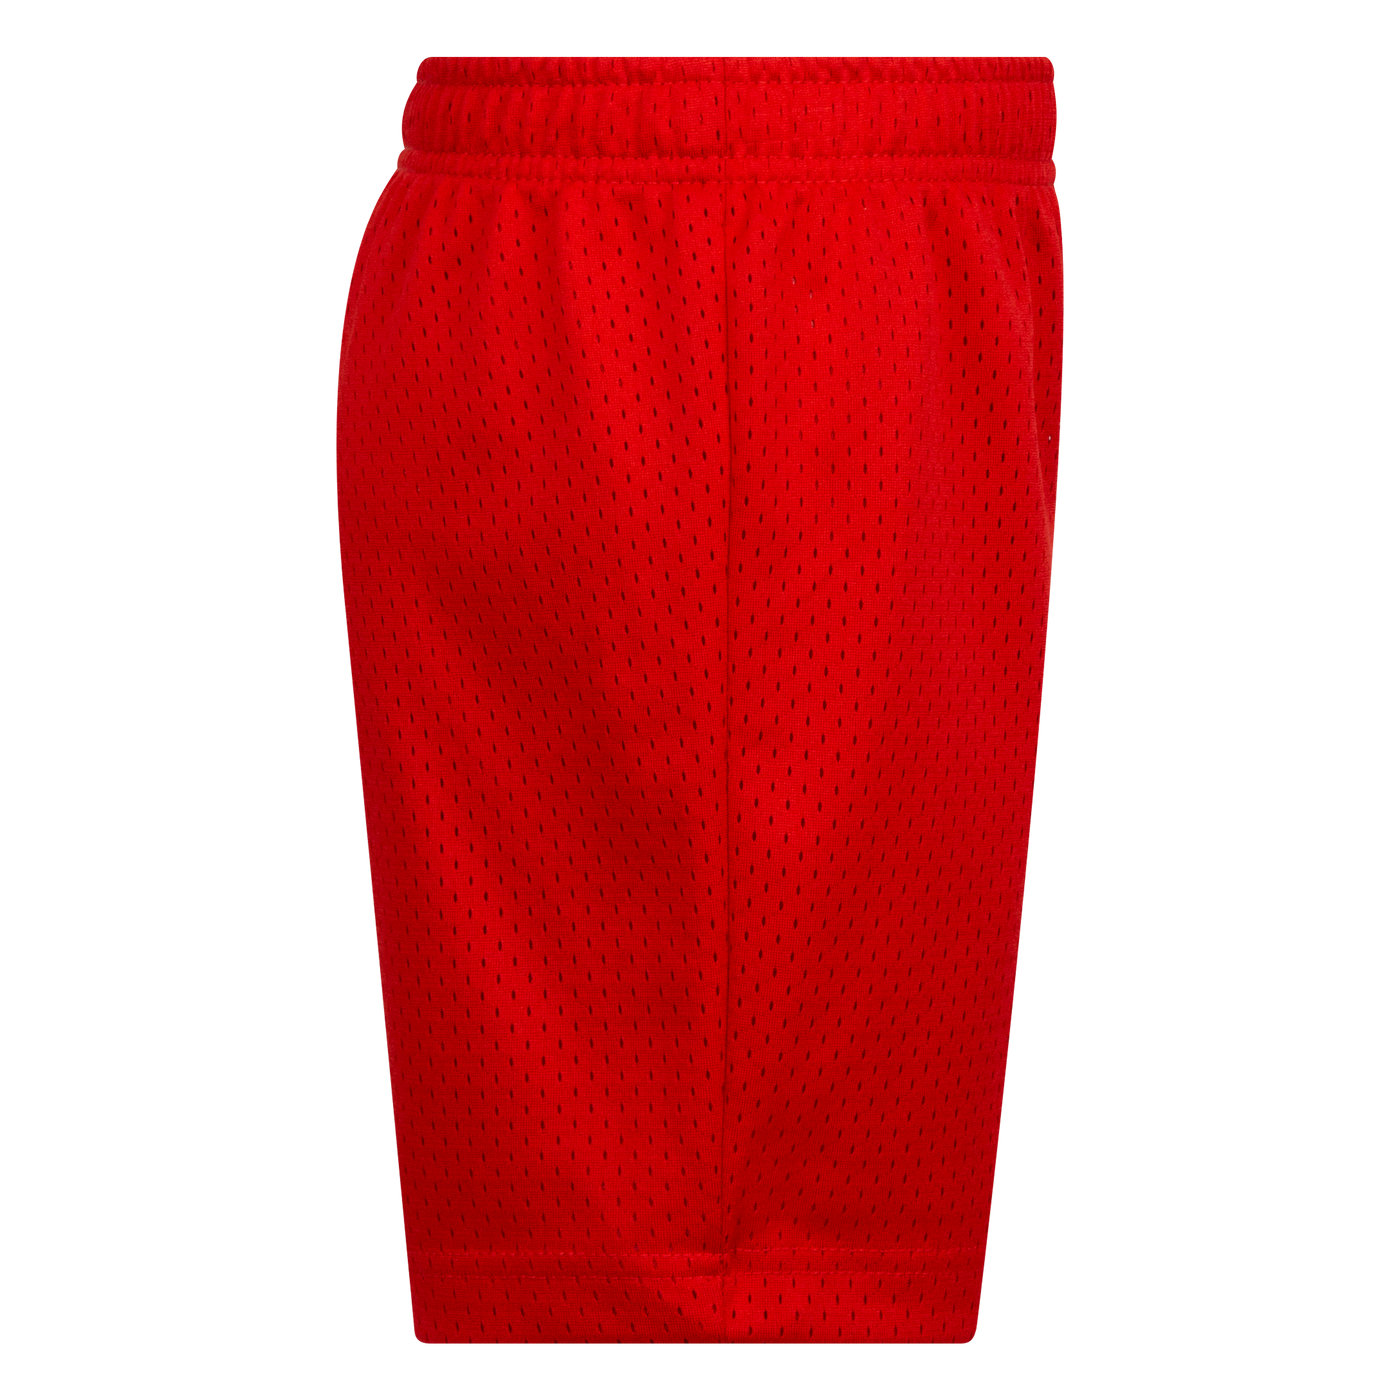 nike red essential mesh shorts Shorts Nike   